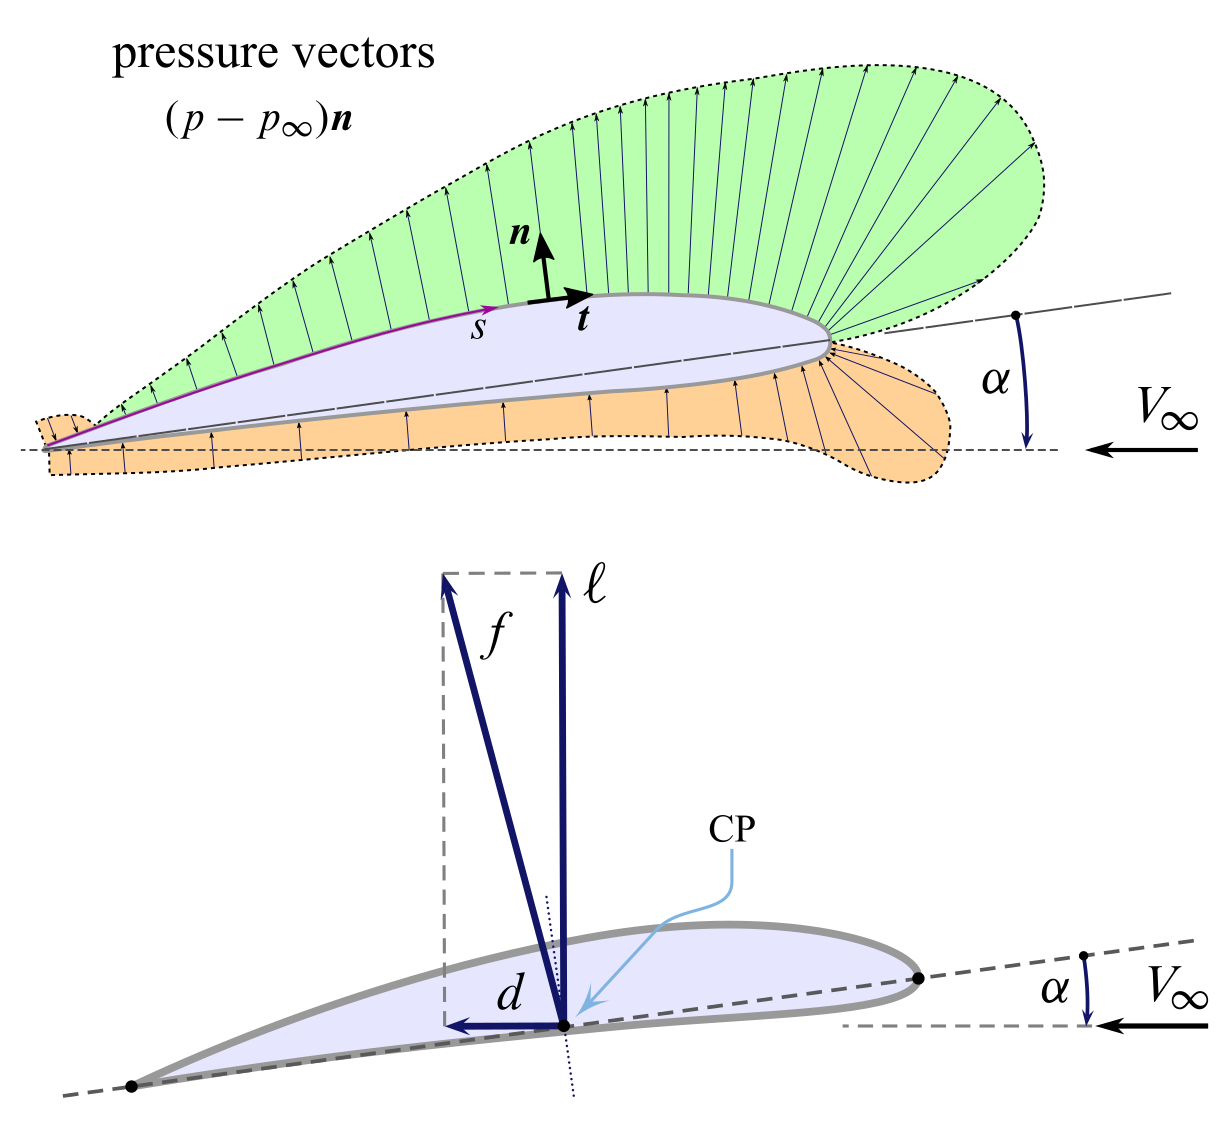 airfoil aerodynamics